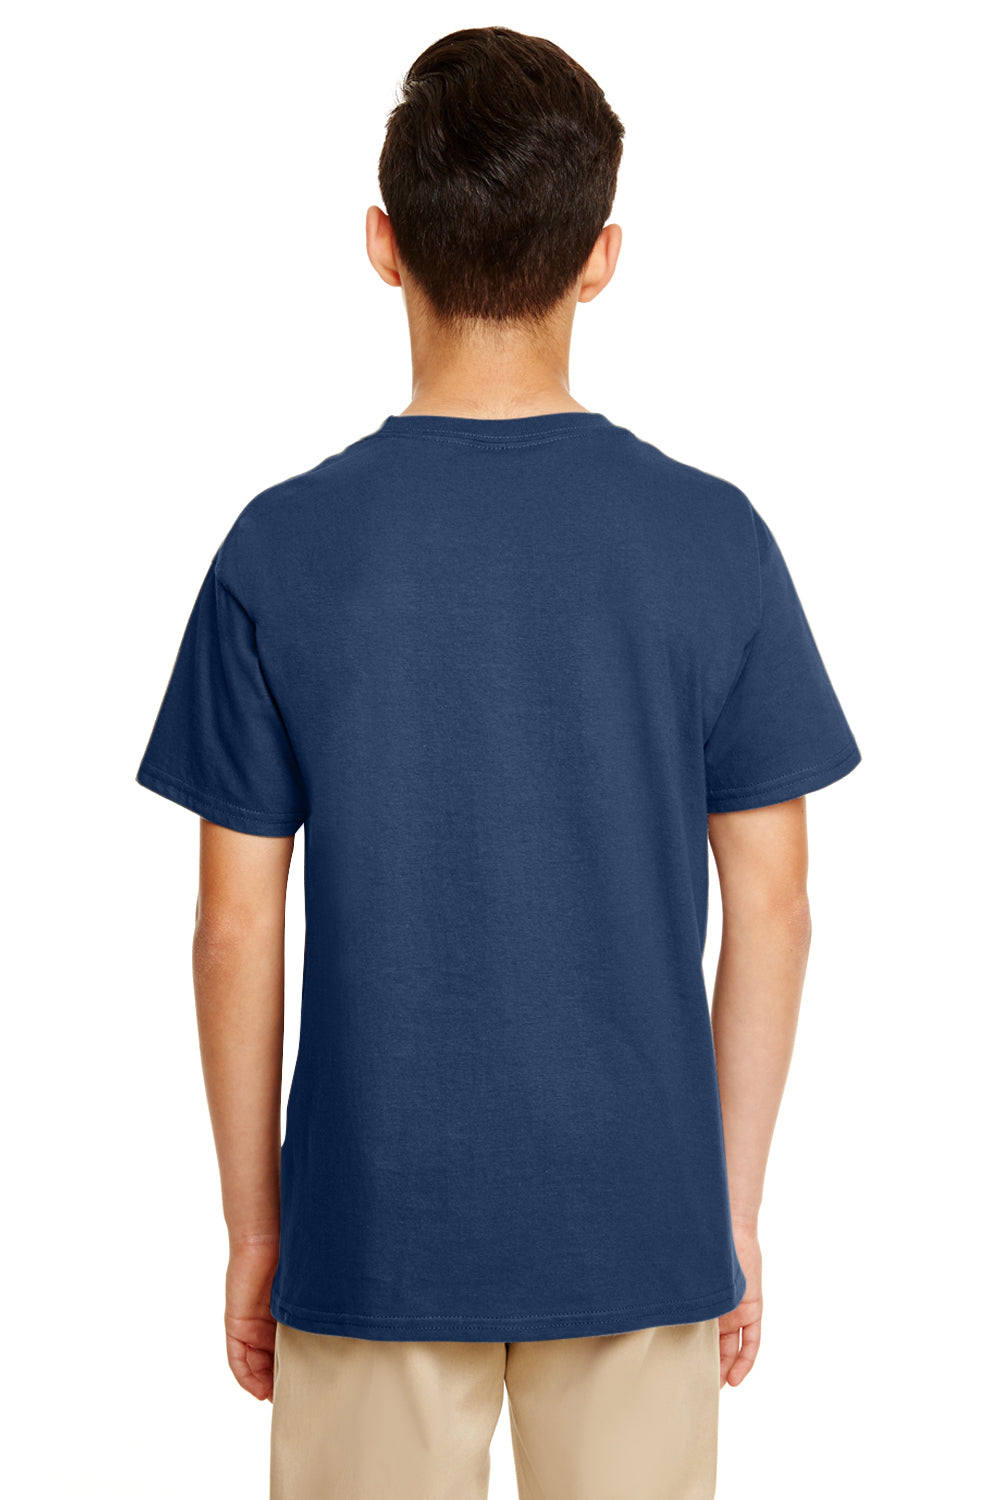 Gildan G645B Youth Softstyle Short Sleeve Crewneck T-Shirt Navy Blue Back